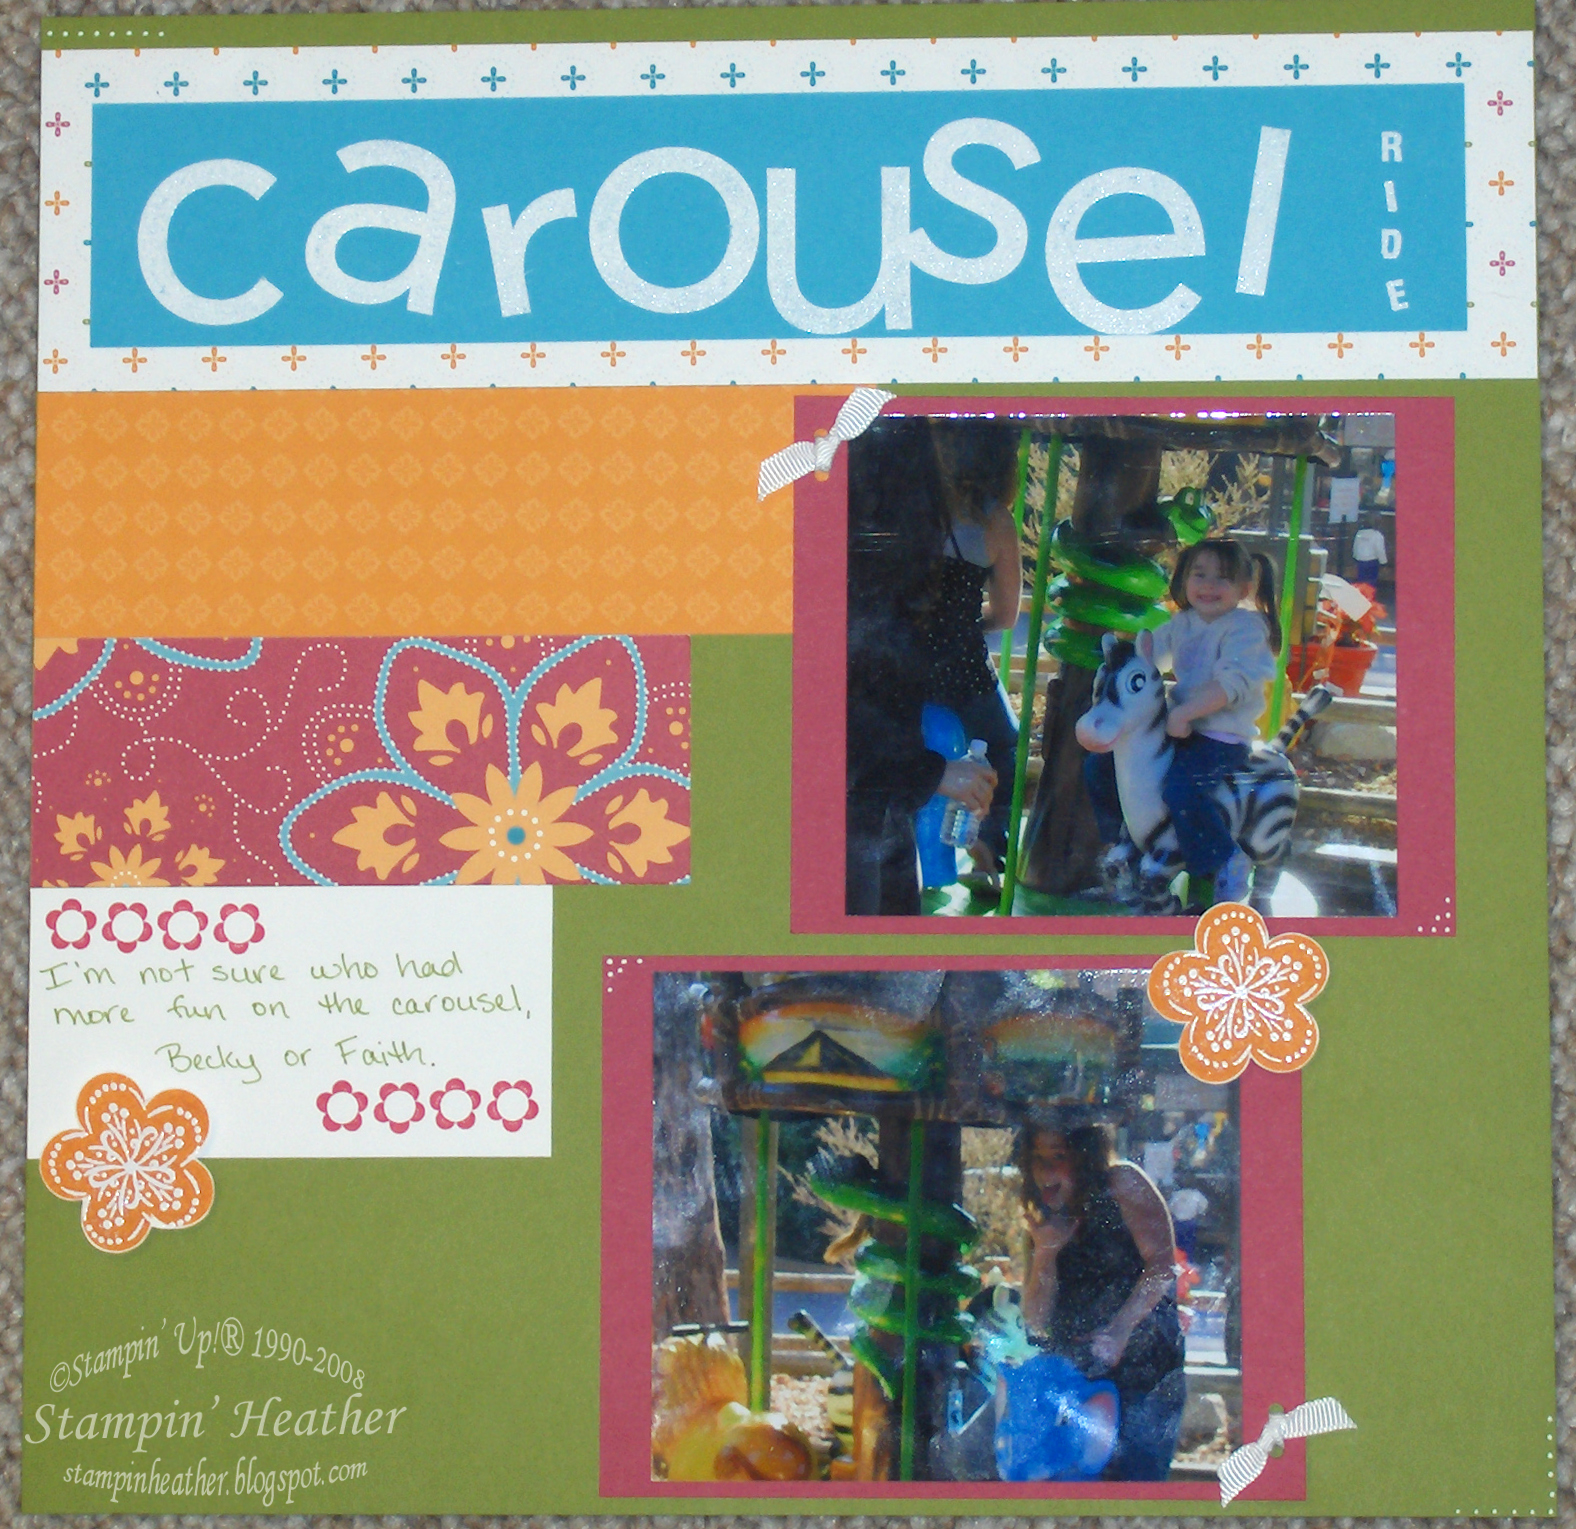 [Carousel+Ride.jpg]